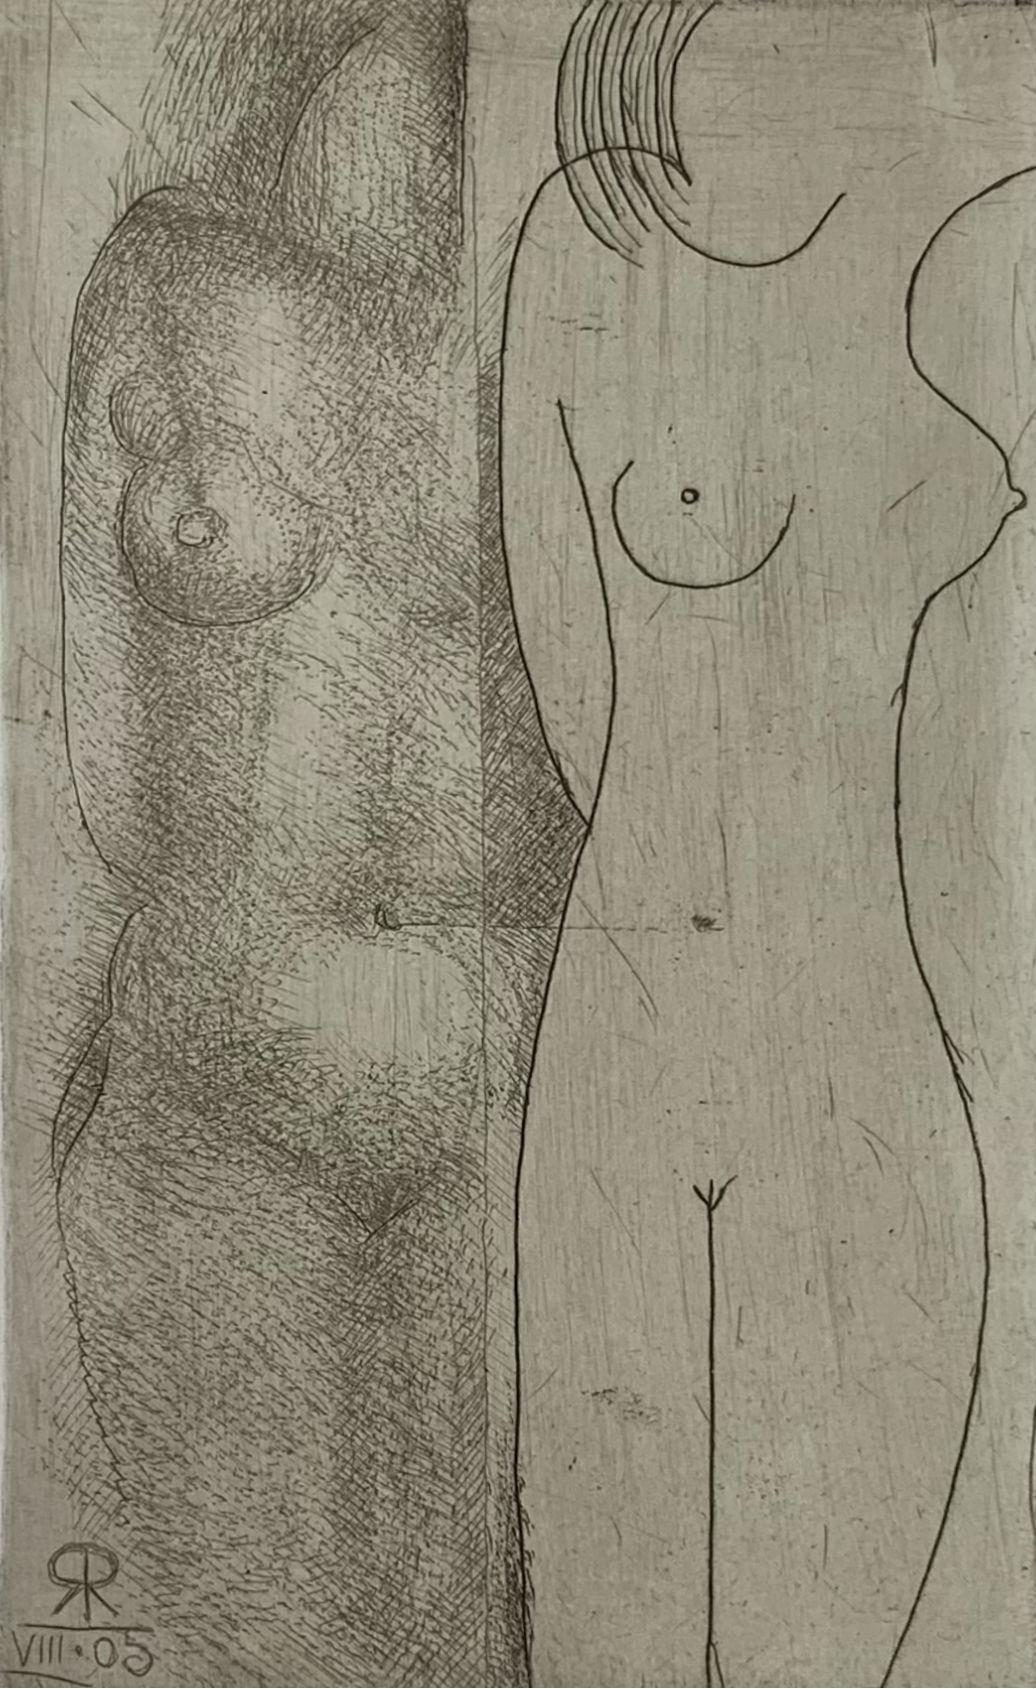 Deux nus - Impression figurative à l'eau-forte, monochrome, minimaliste, nu féminin